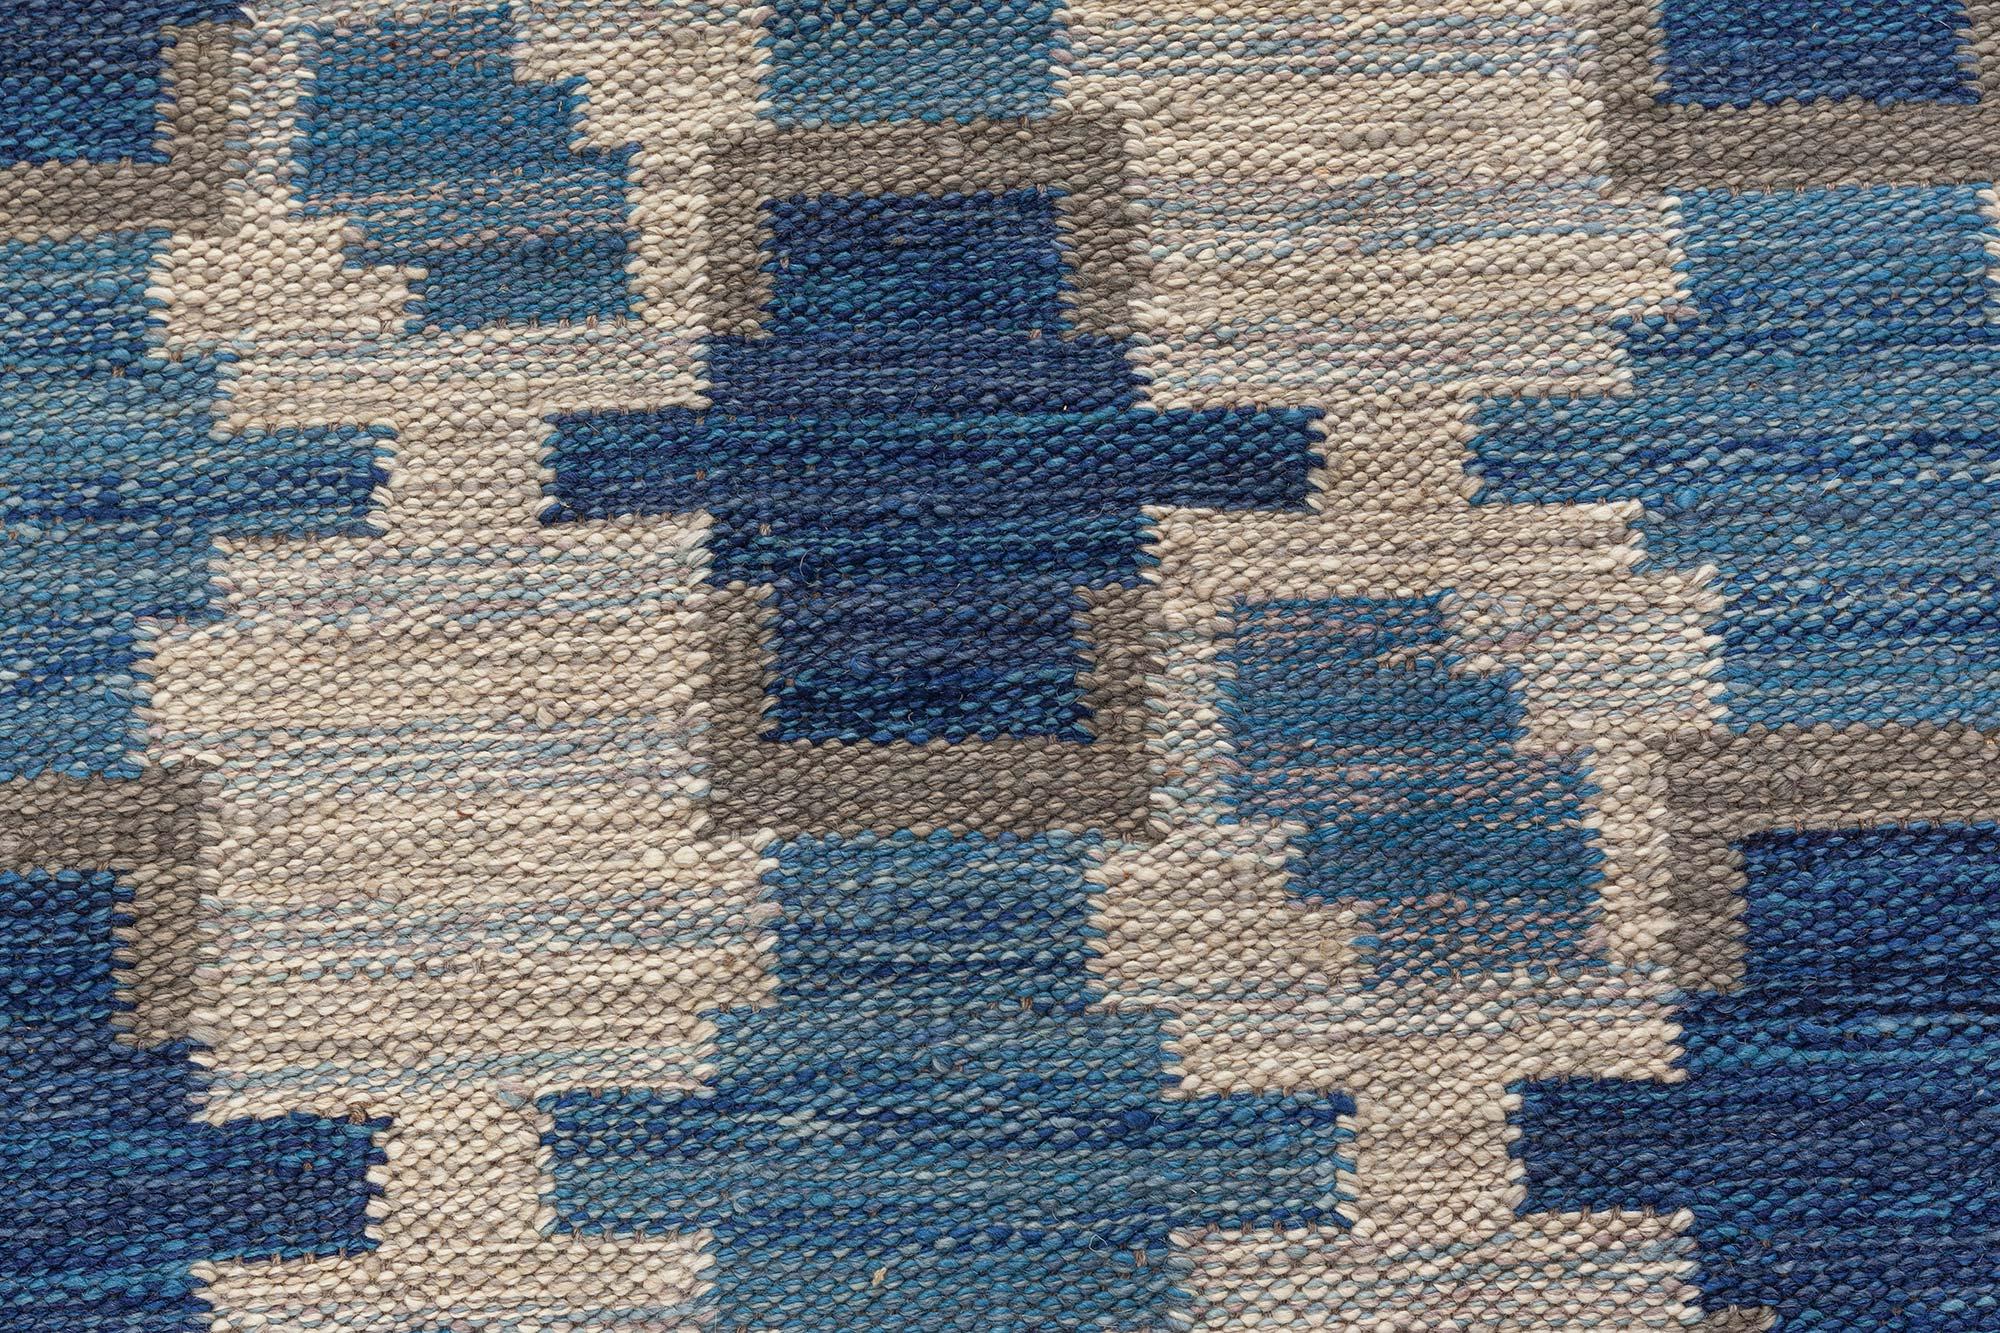 Modern Swedish Flat Weave rug by Doris Leslie Blau
Size: 4'2